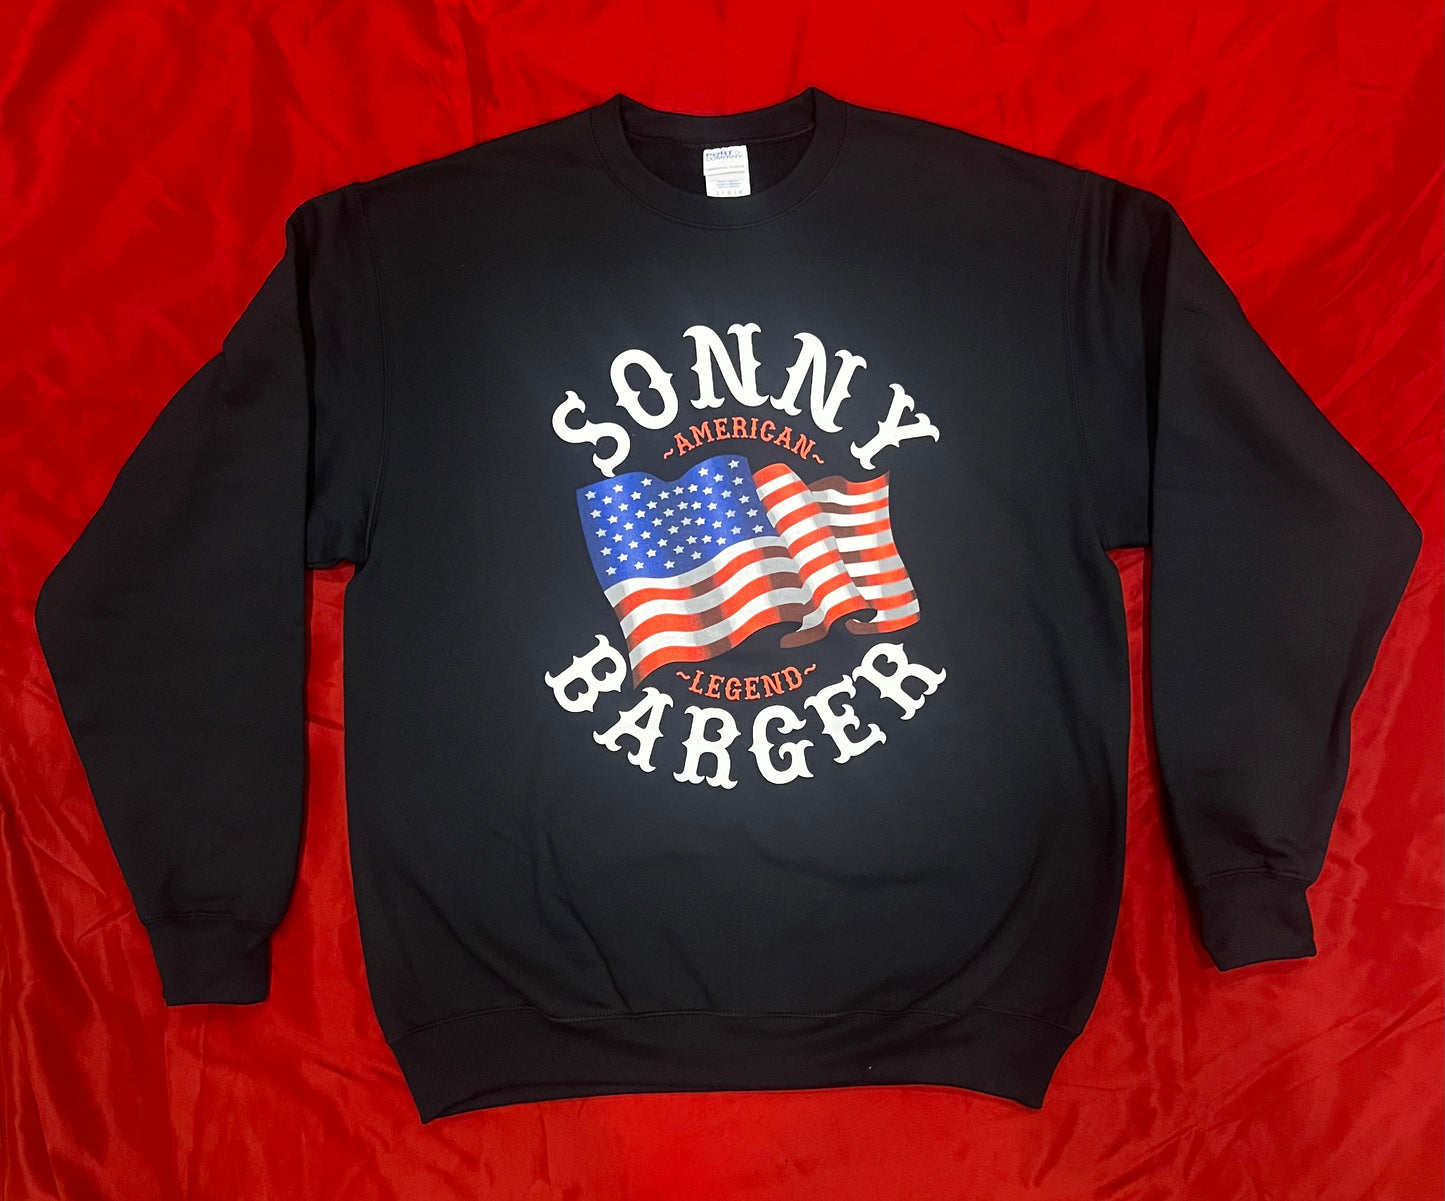 SONNY BARGER "AMERICAN LEGEND" Crewneck Sweatshirt